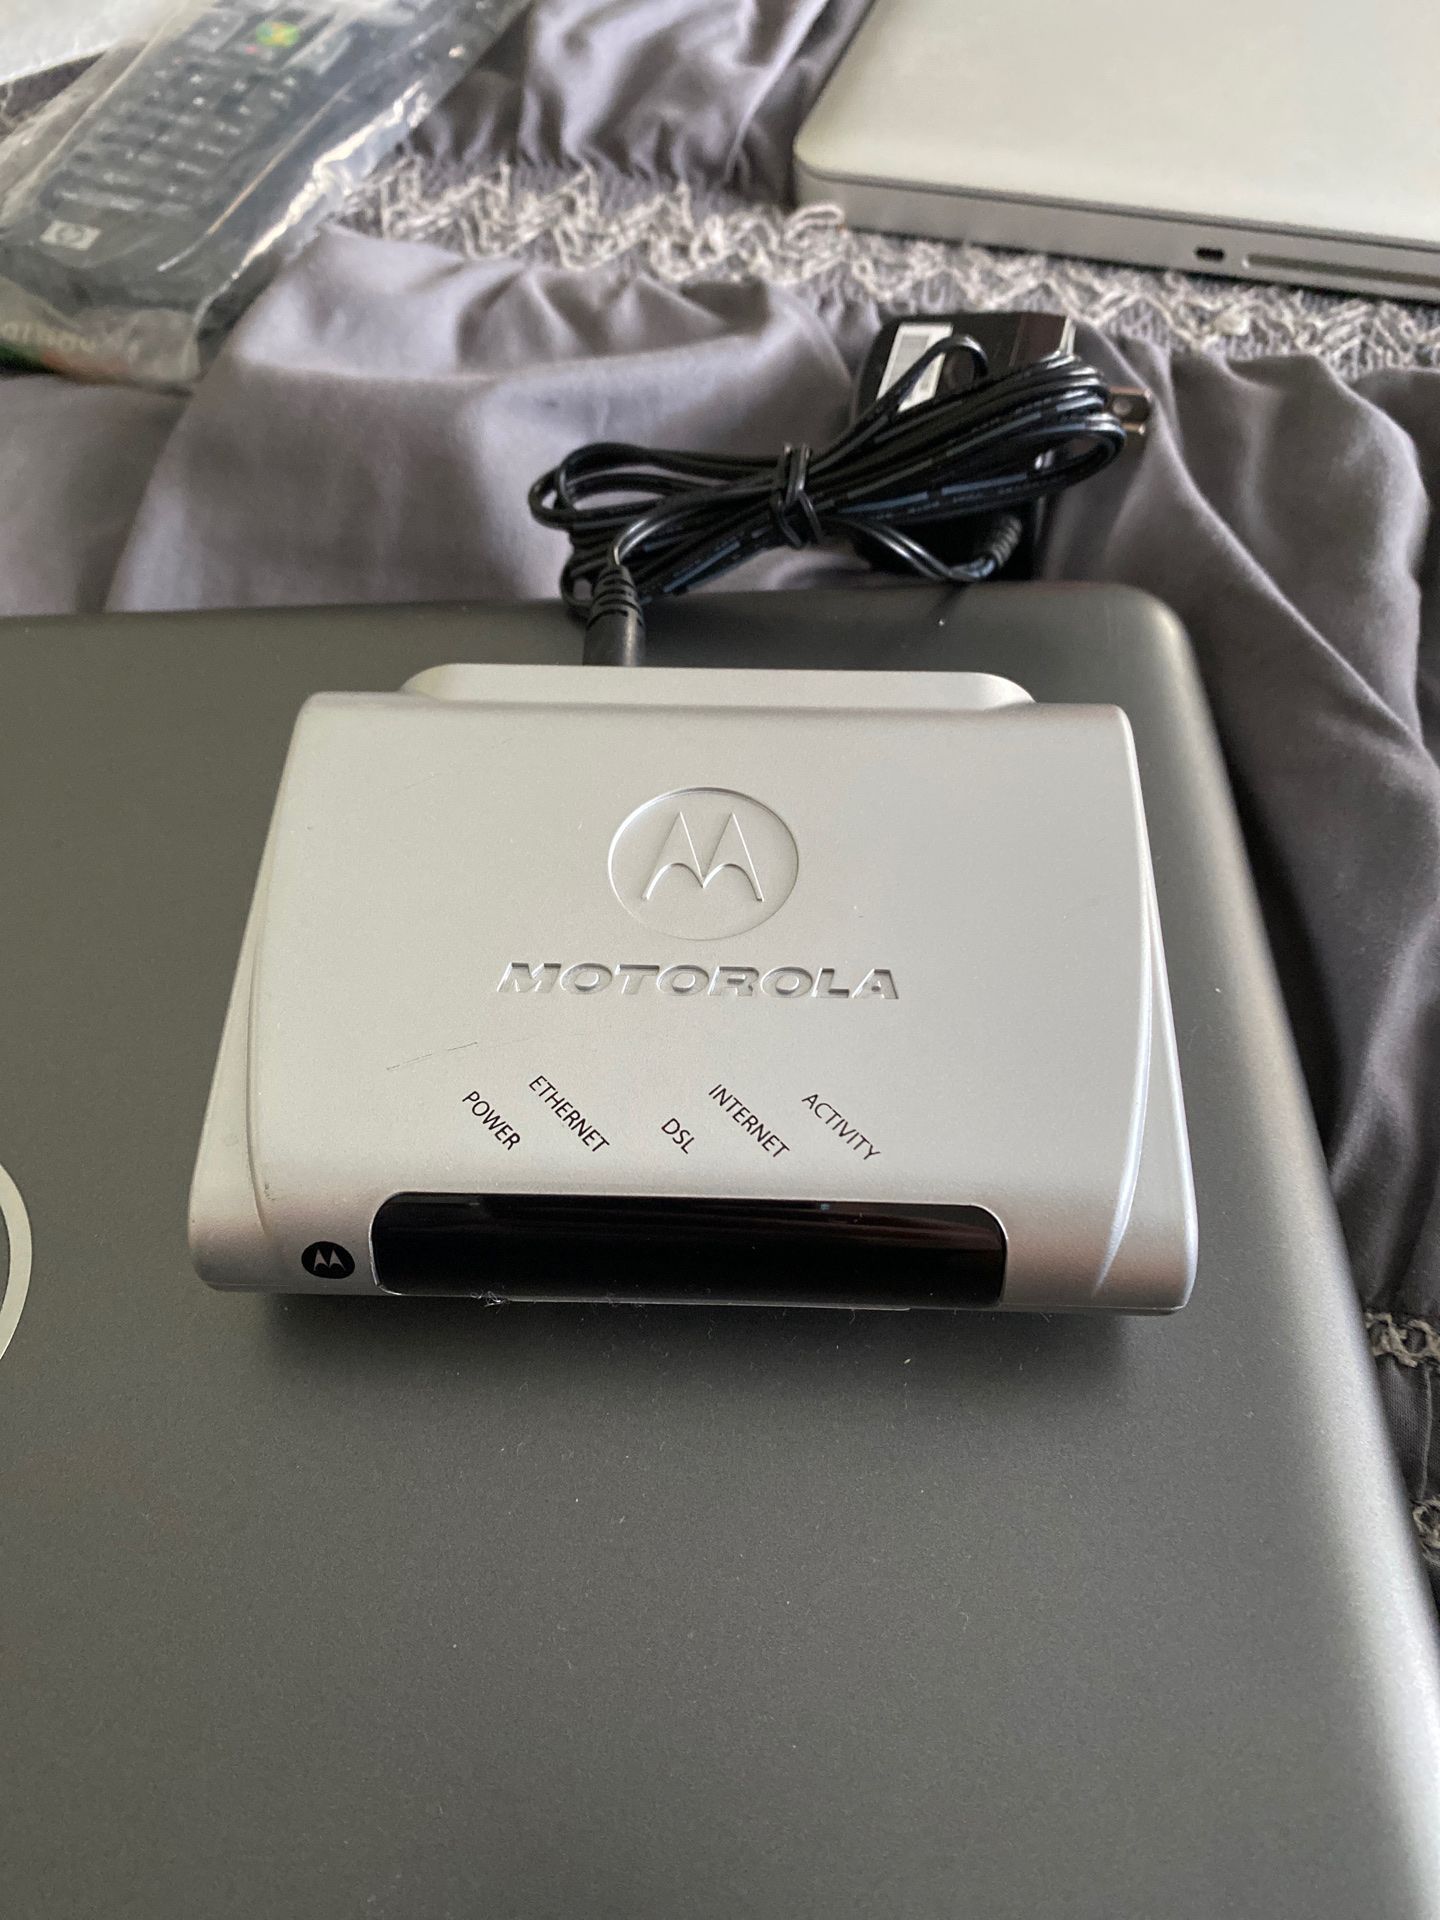 Motorola DSL modem